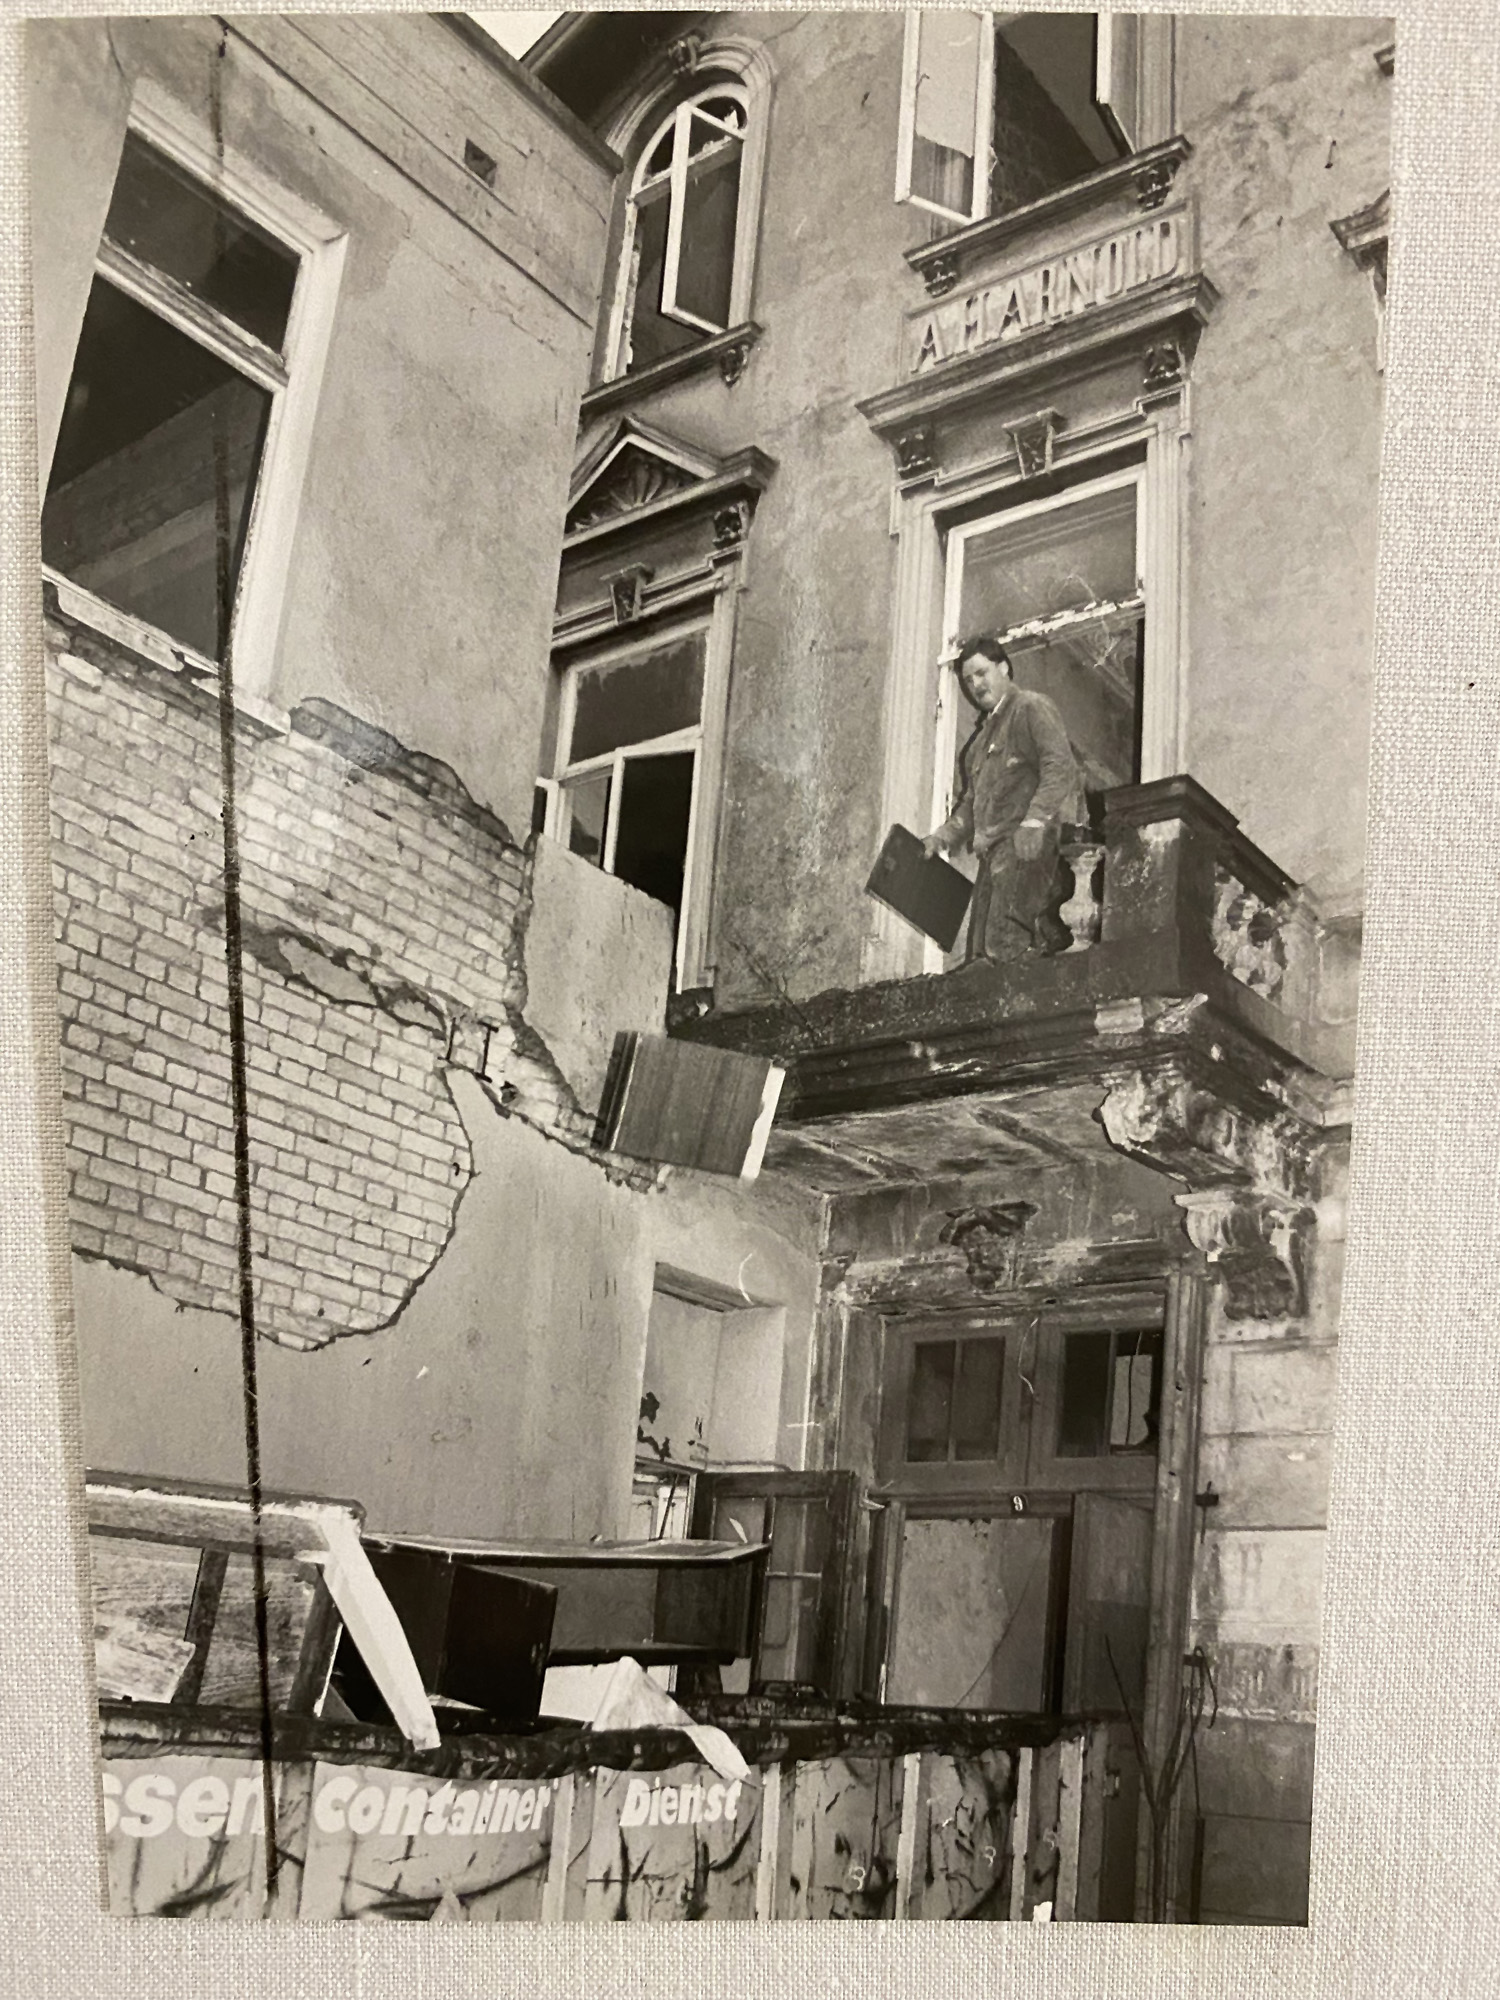 1995 Abbrucharbeiten Schwarz Weiss Balkon Korings Konzert haus 1995, Foto unbekannt